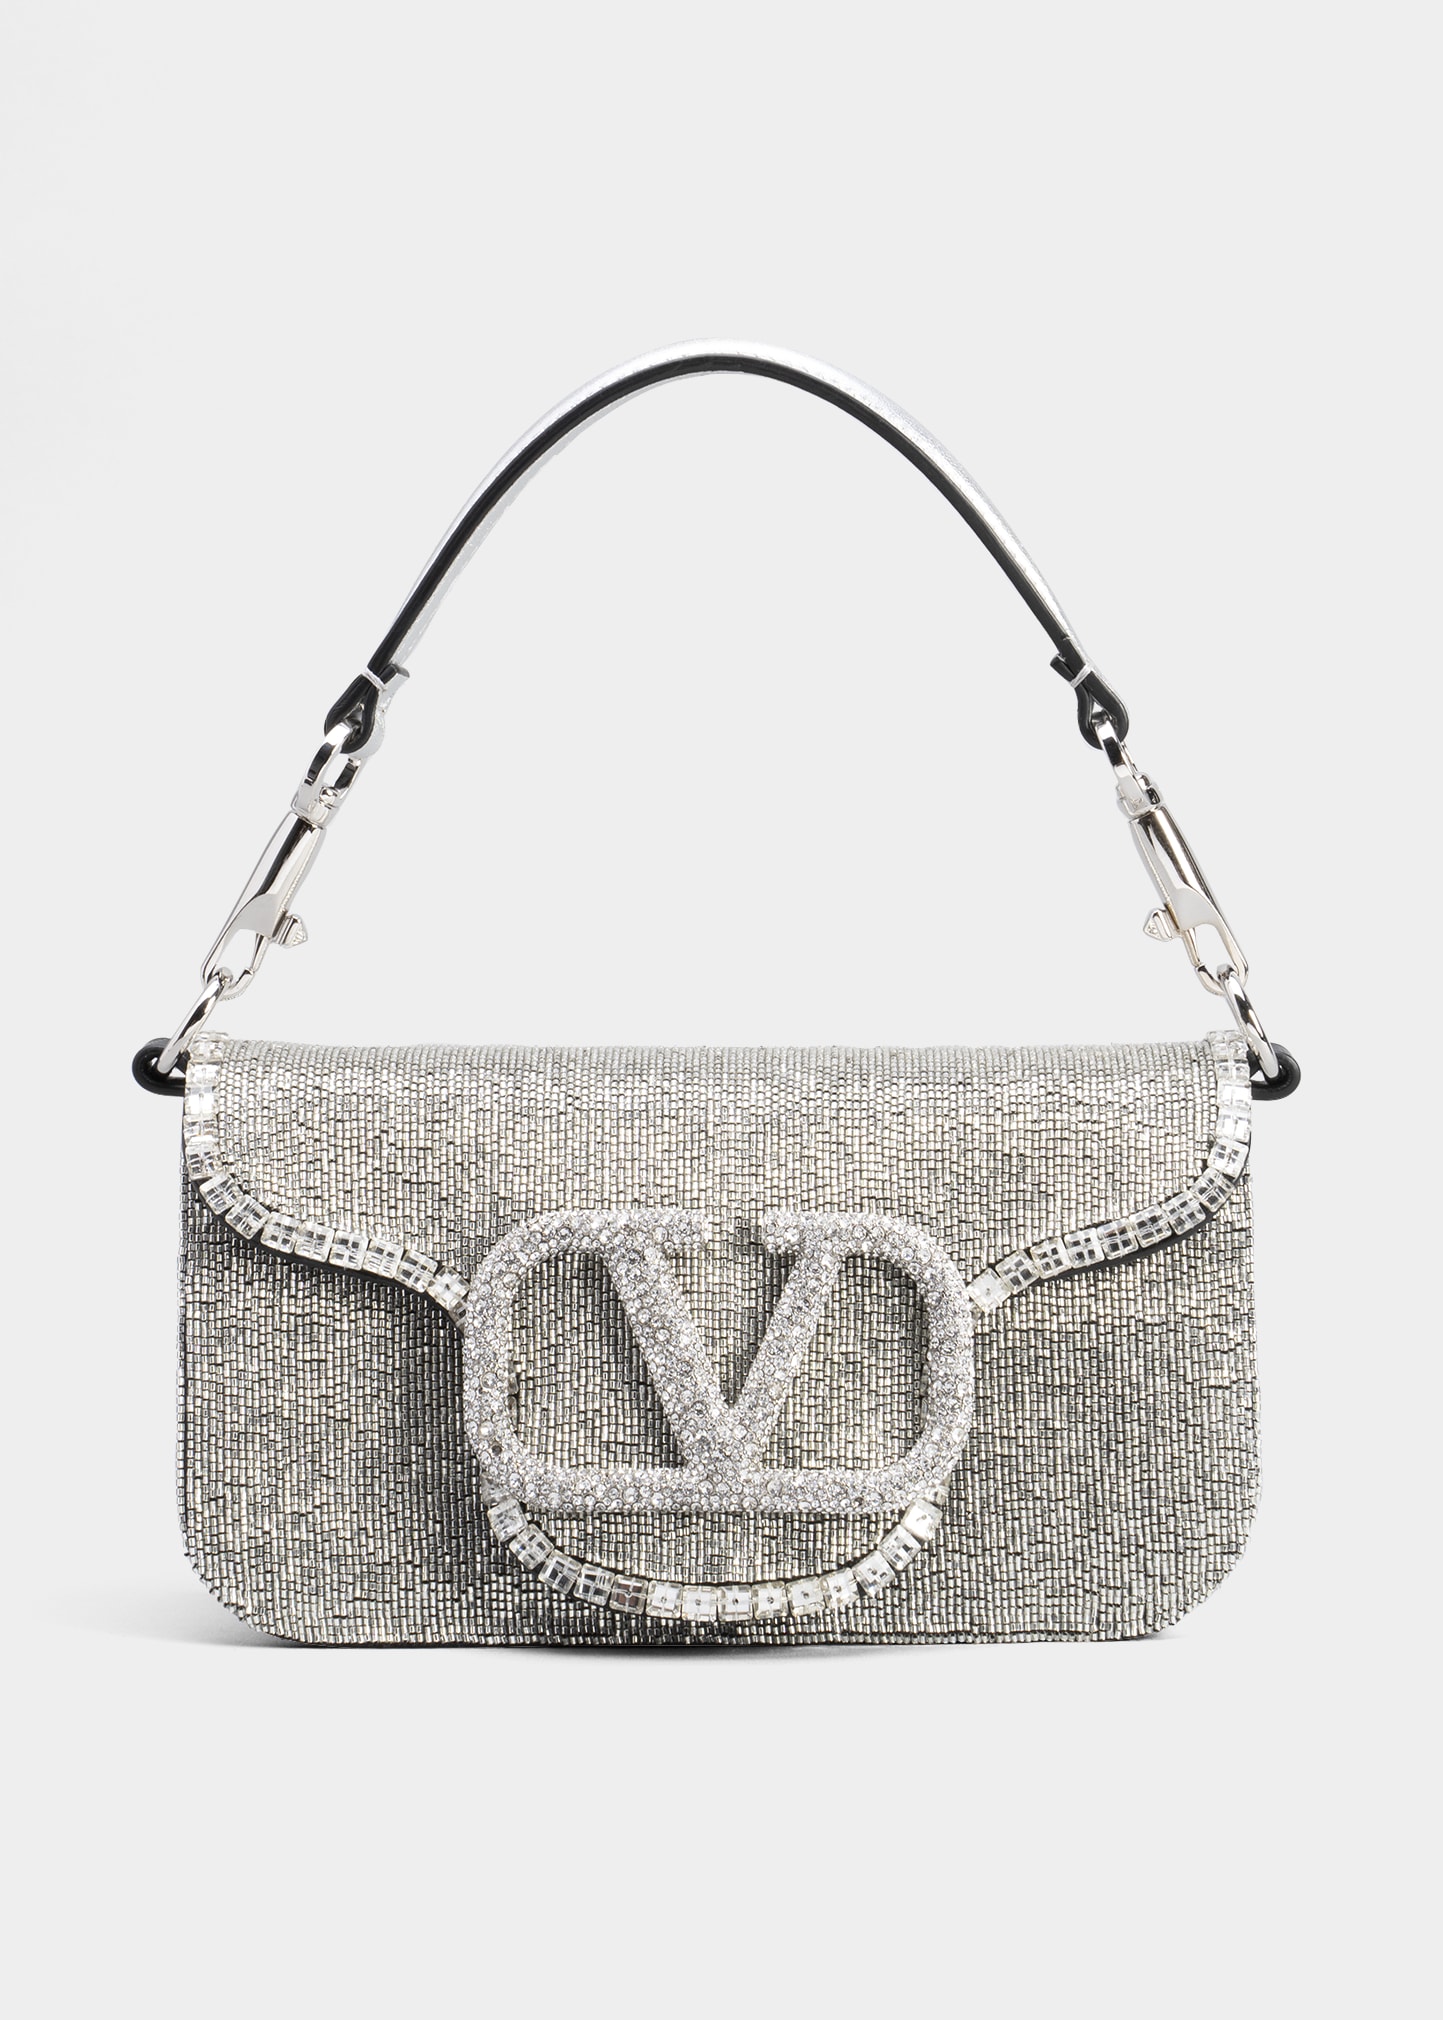 Valentino Embellished Leather Bag | bergdorfgoodman.com